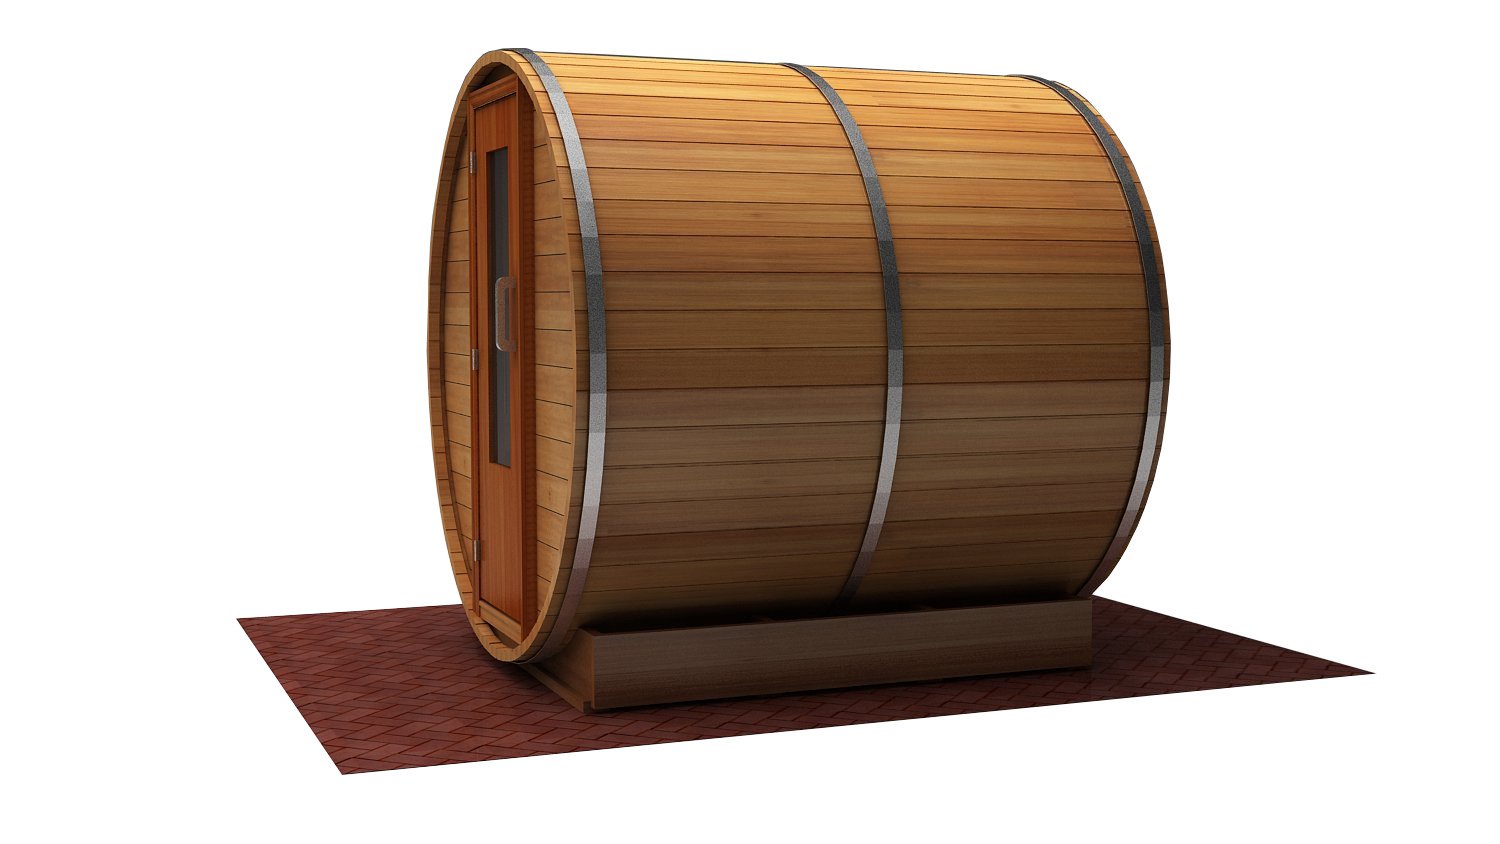 Barrel Sauna Kit - Outdoor Barrel Sauna Room 7' x 8' - Electric Heater